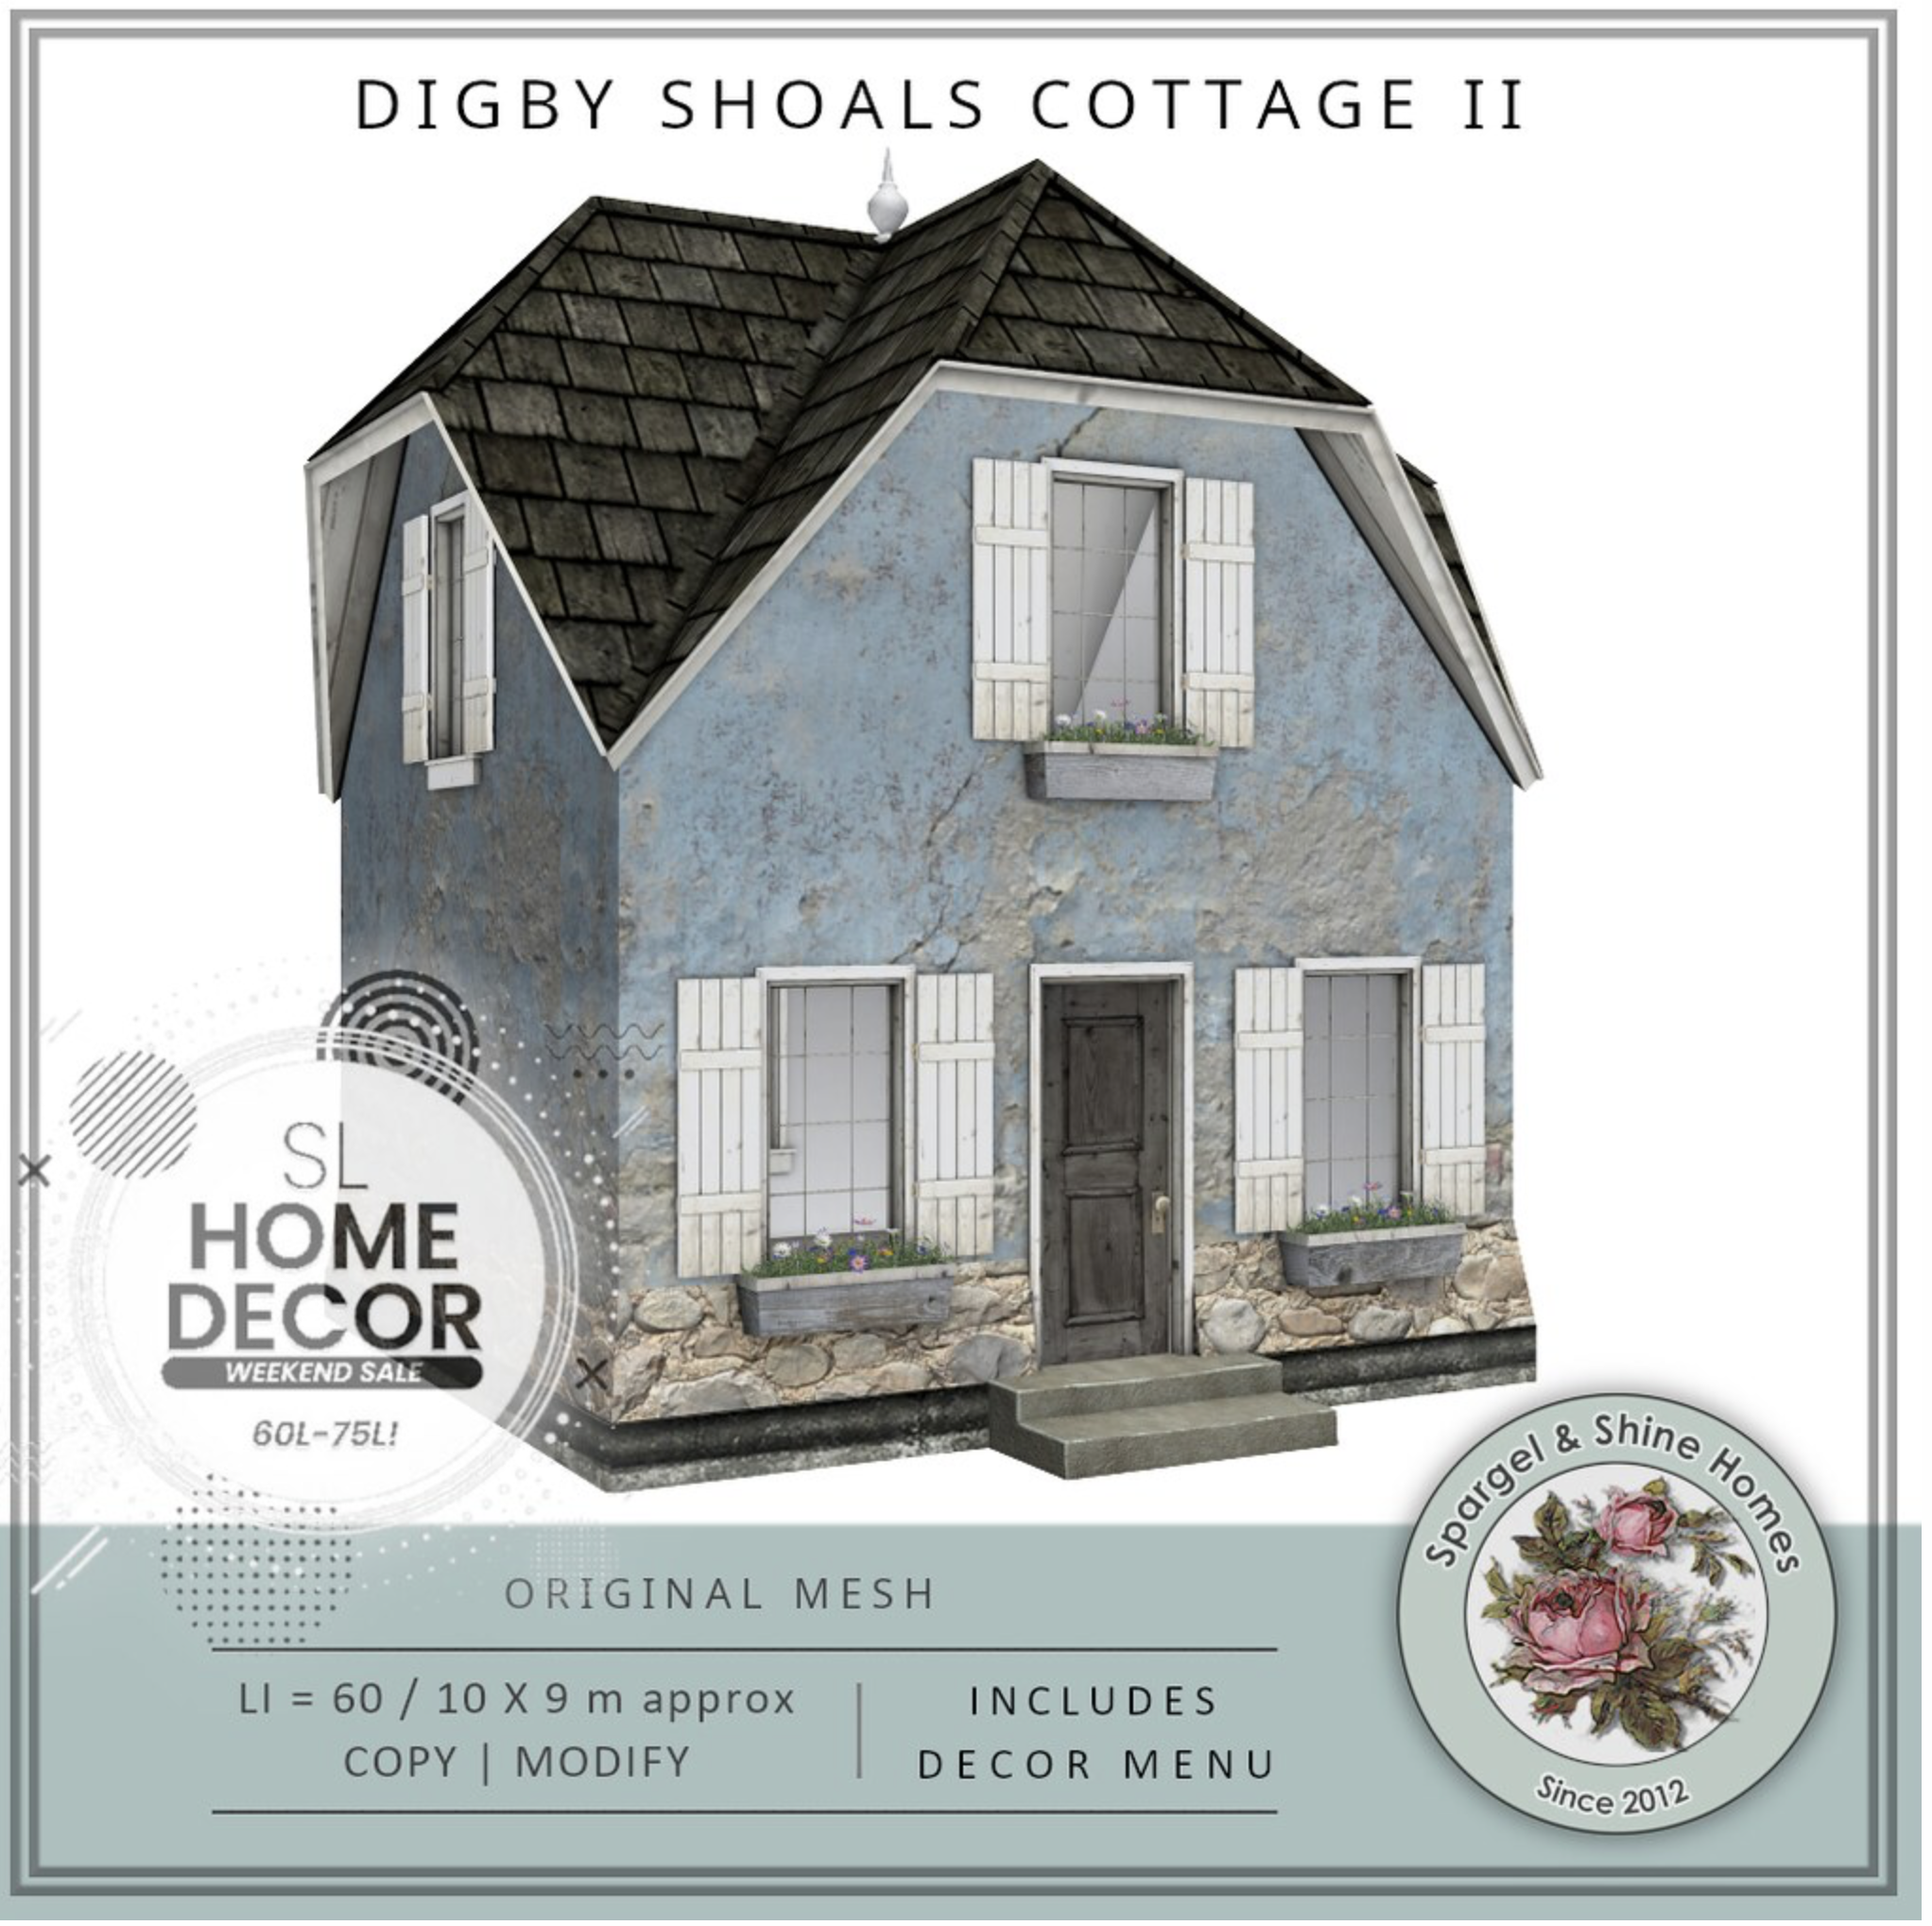 Spargel & Shine – Digby Shoals Cottage II